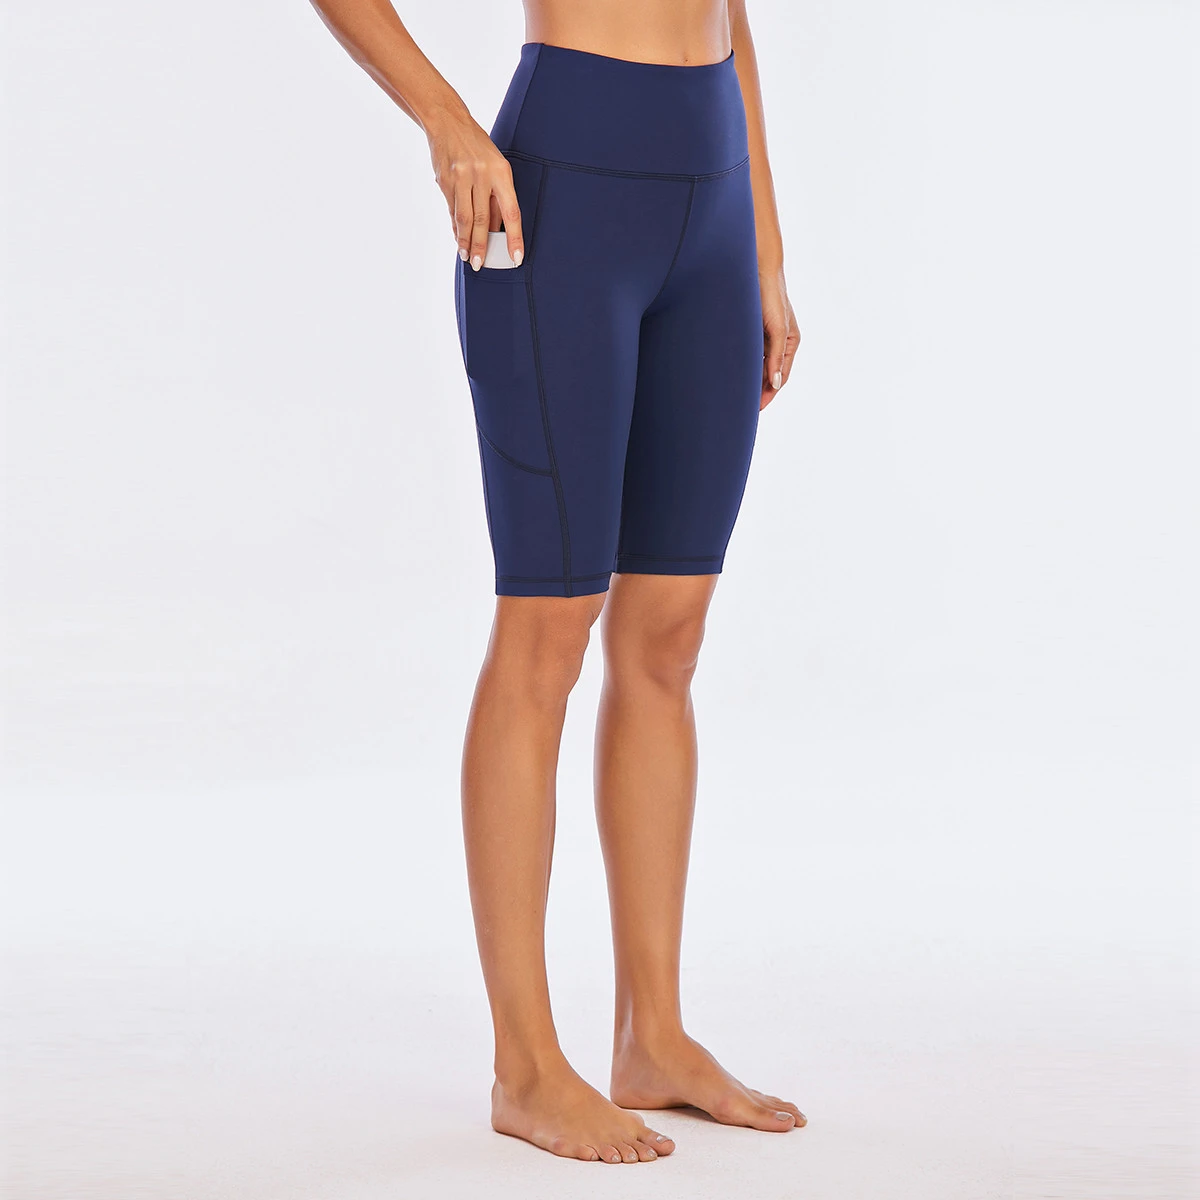 factory made oem female sportswear legging high waist biker shorts sets stretchy soft yoga sport shorts for women